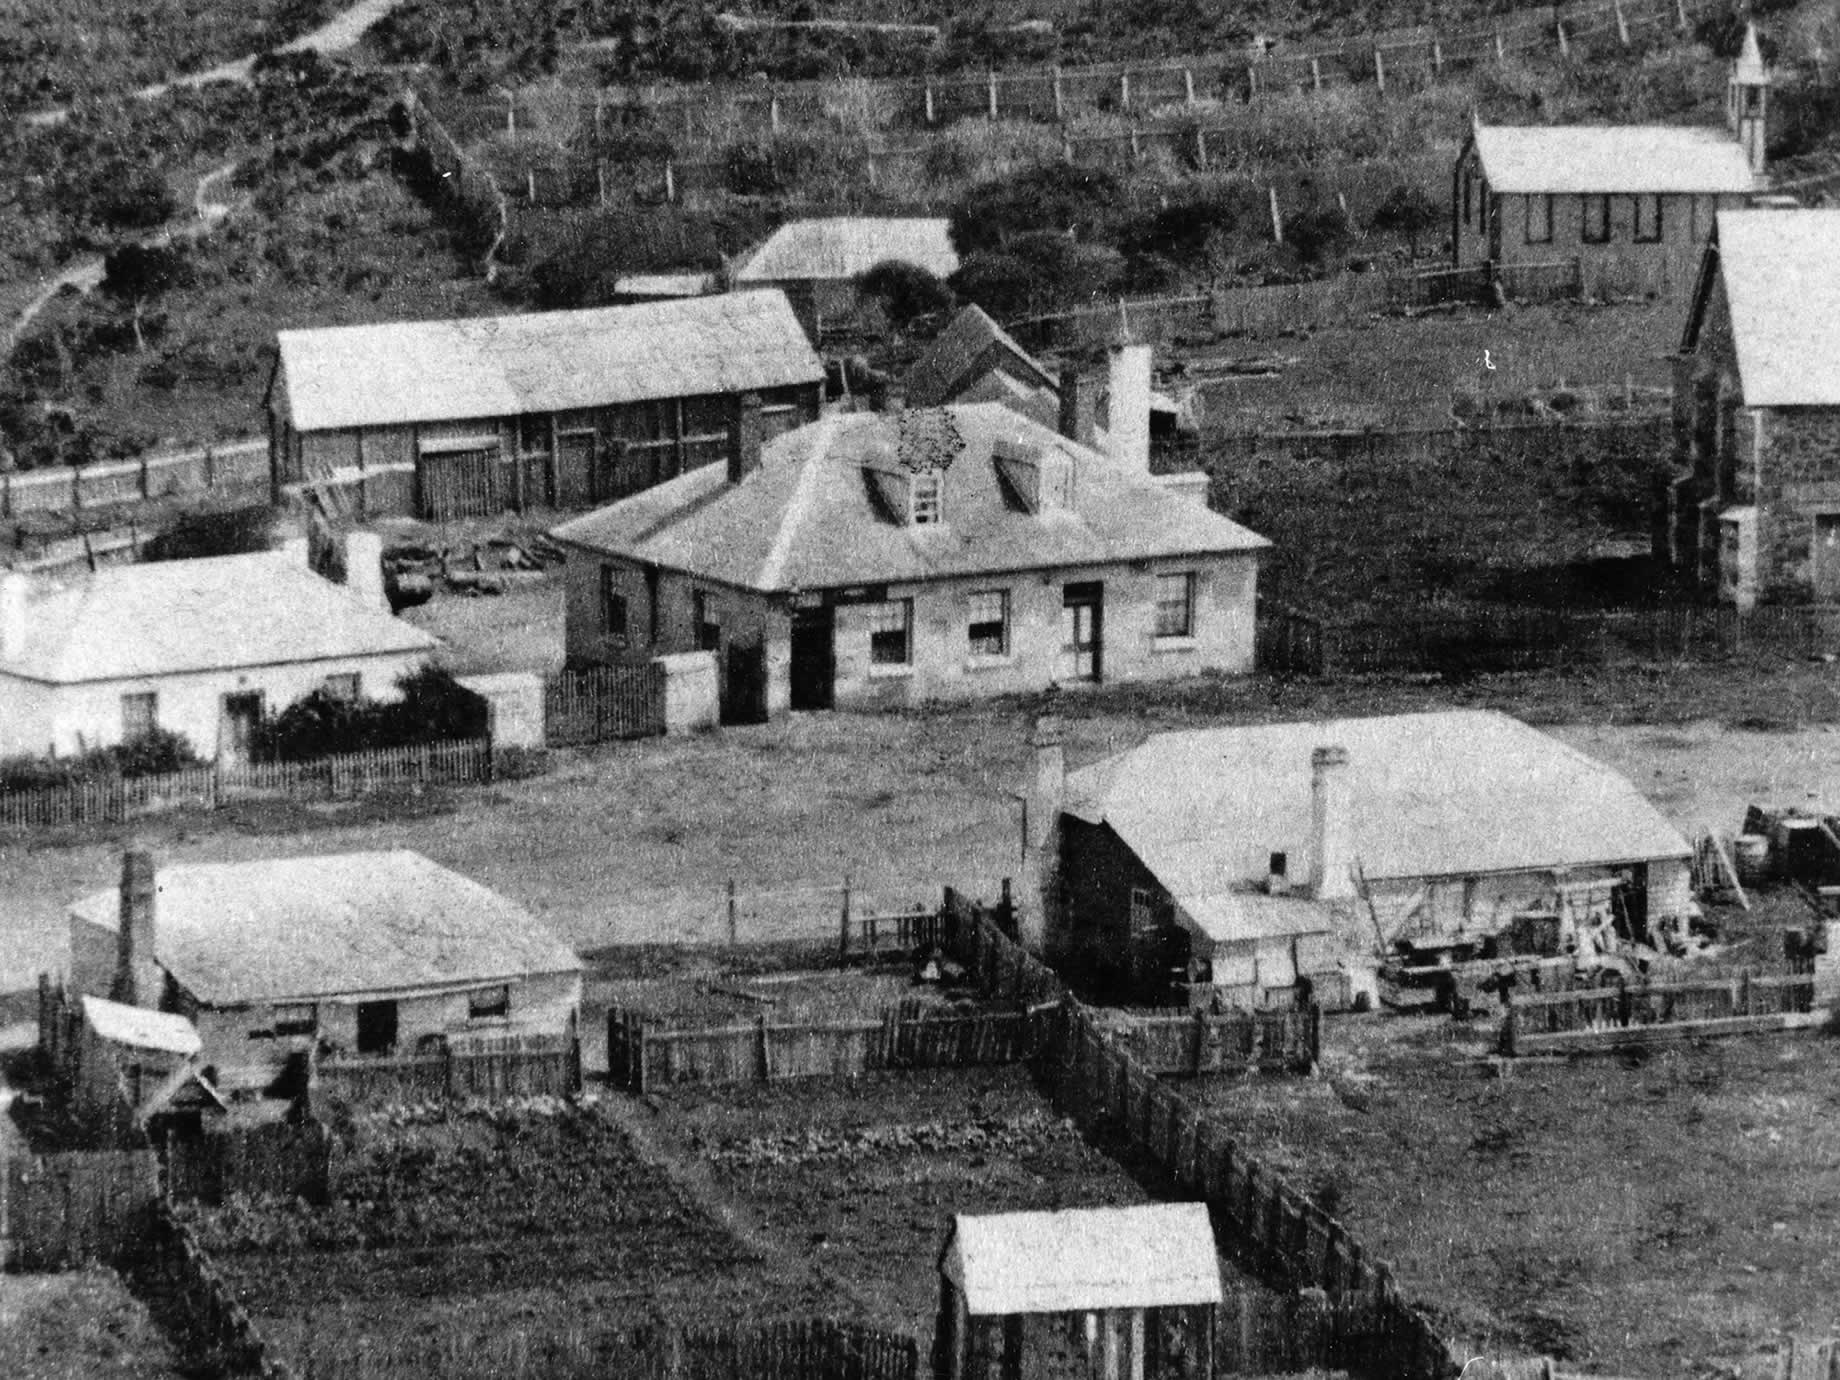 View of the Plough Inn, 1858